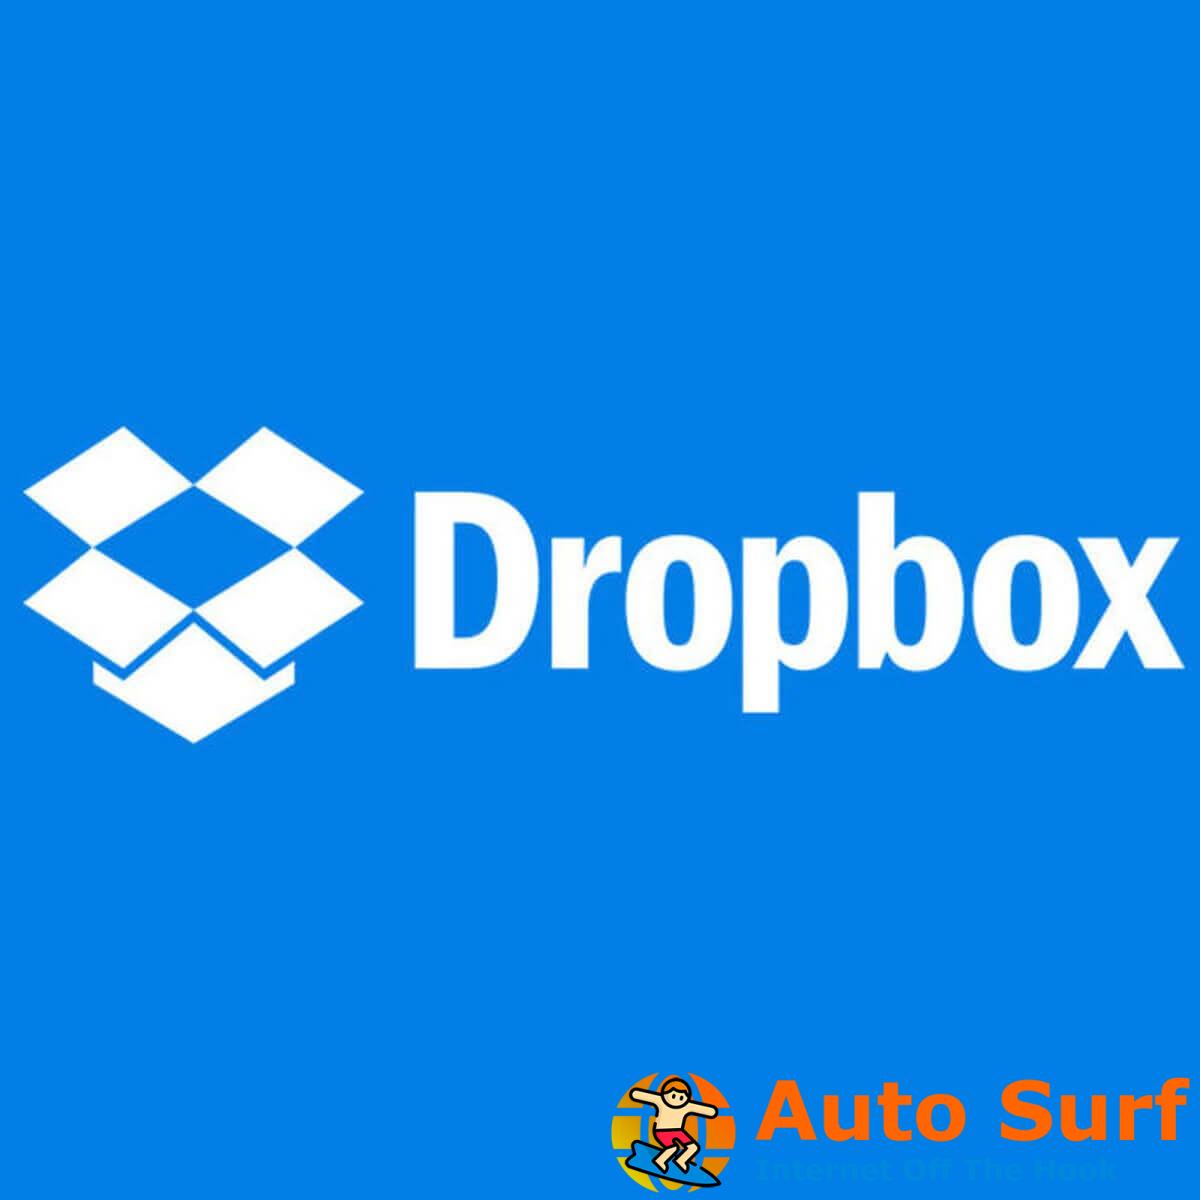 Error de Dropbox: tu computadora no es compatible [Solved]